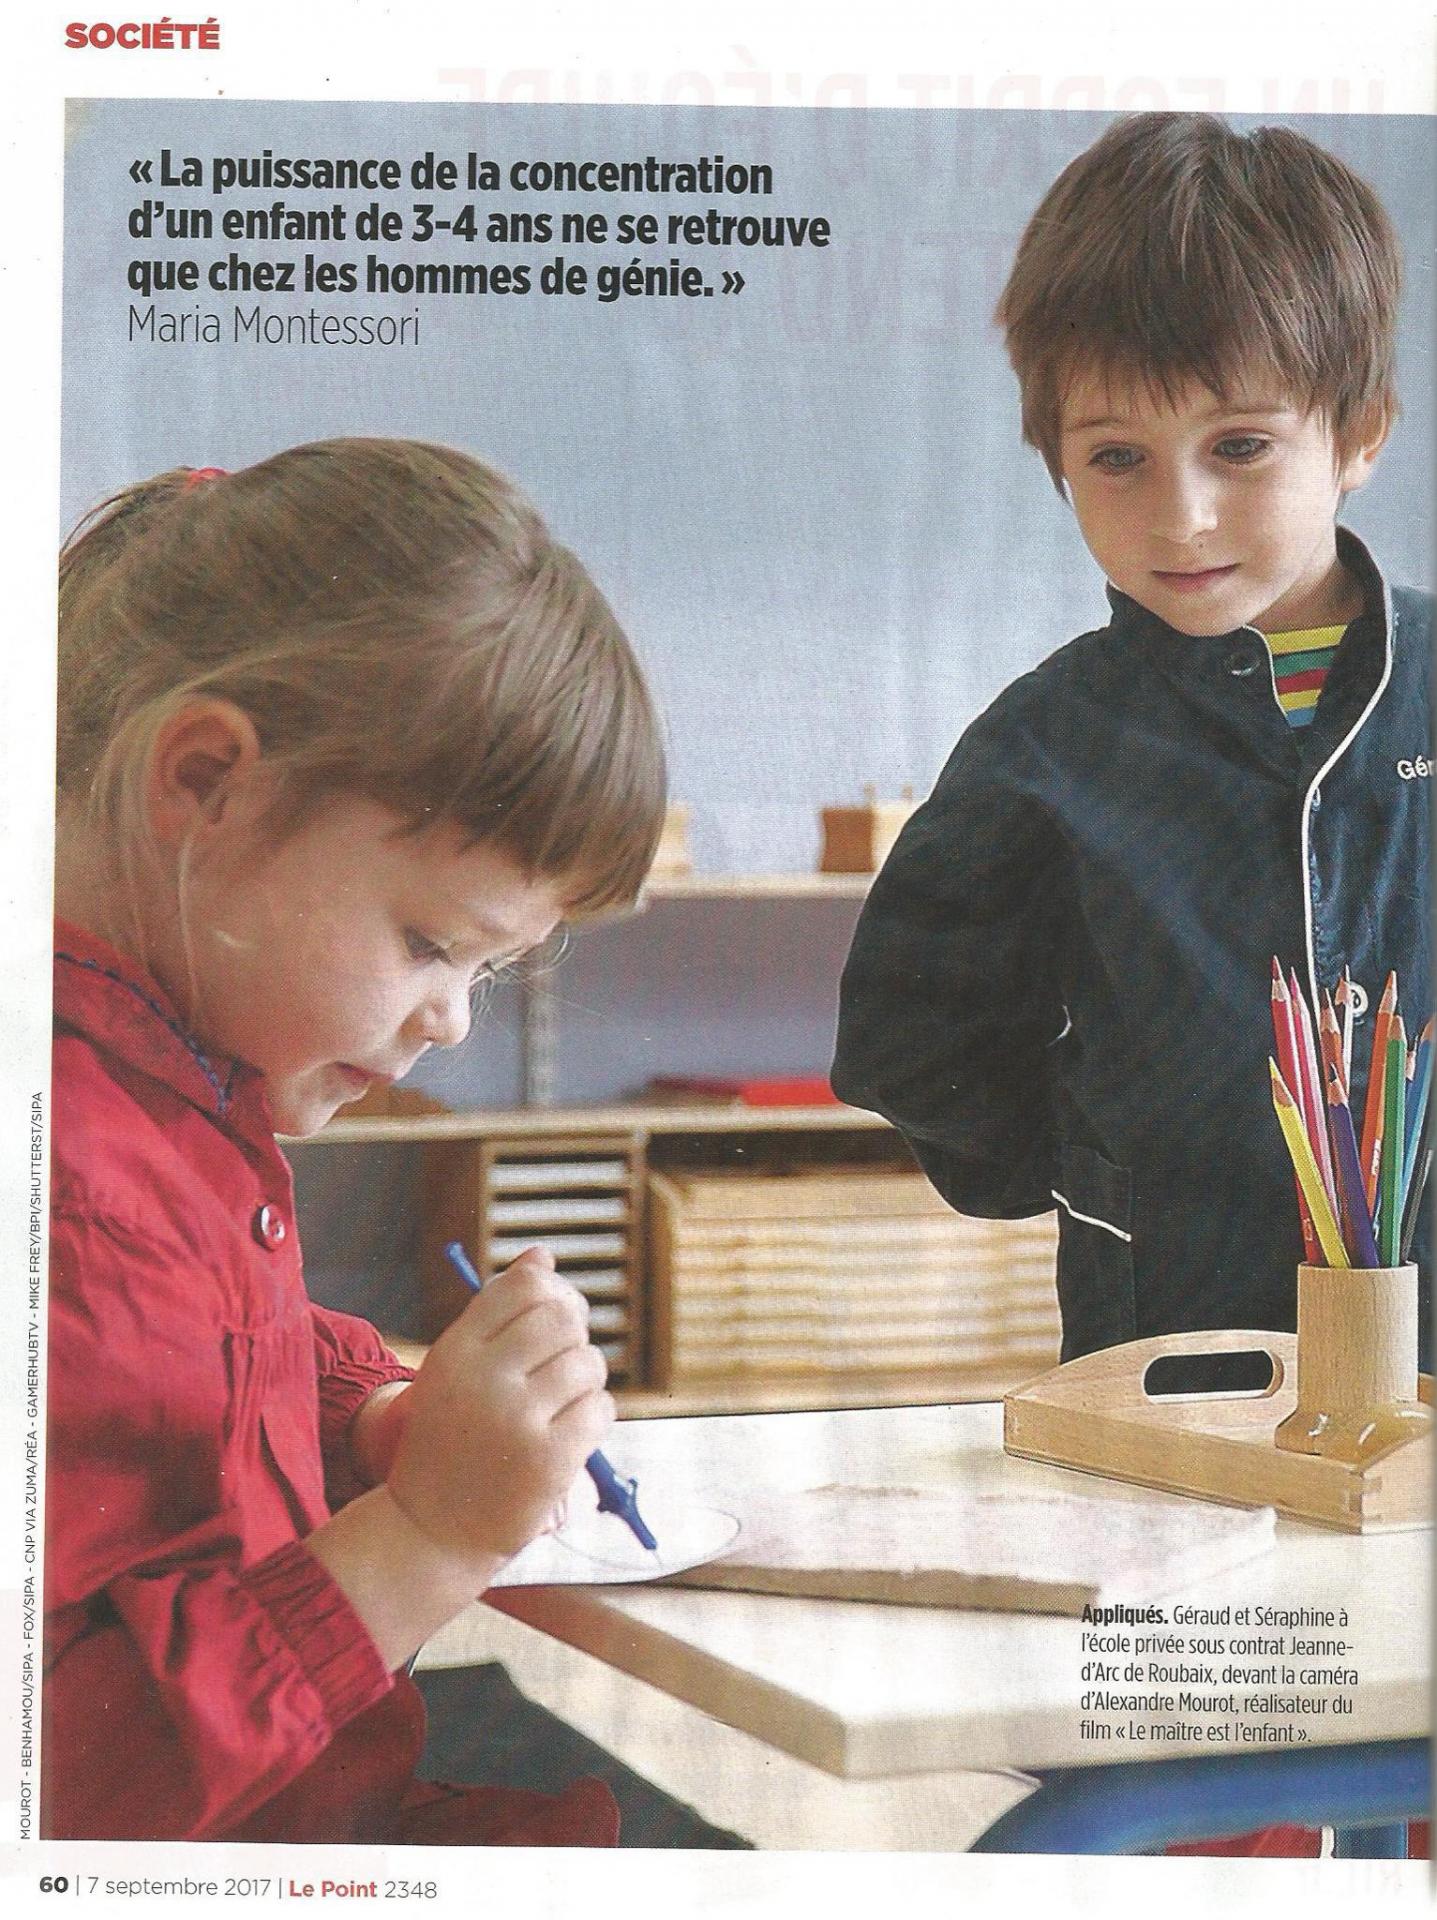 Montessori 1